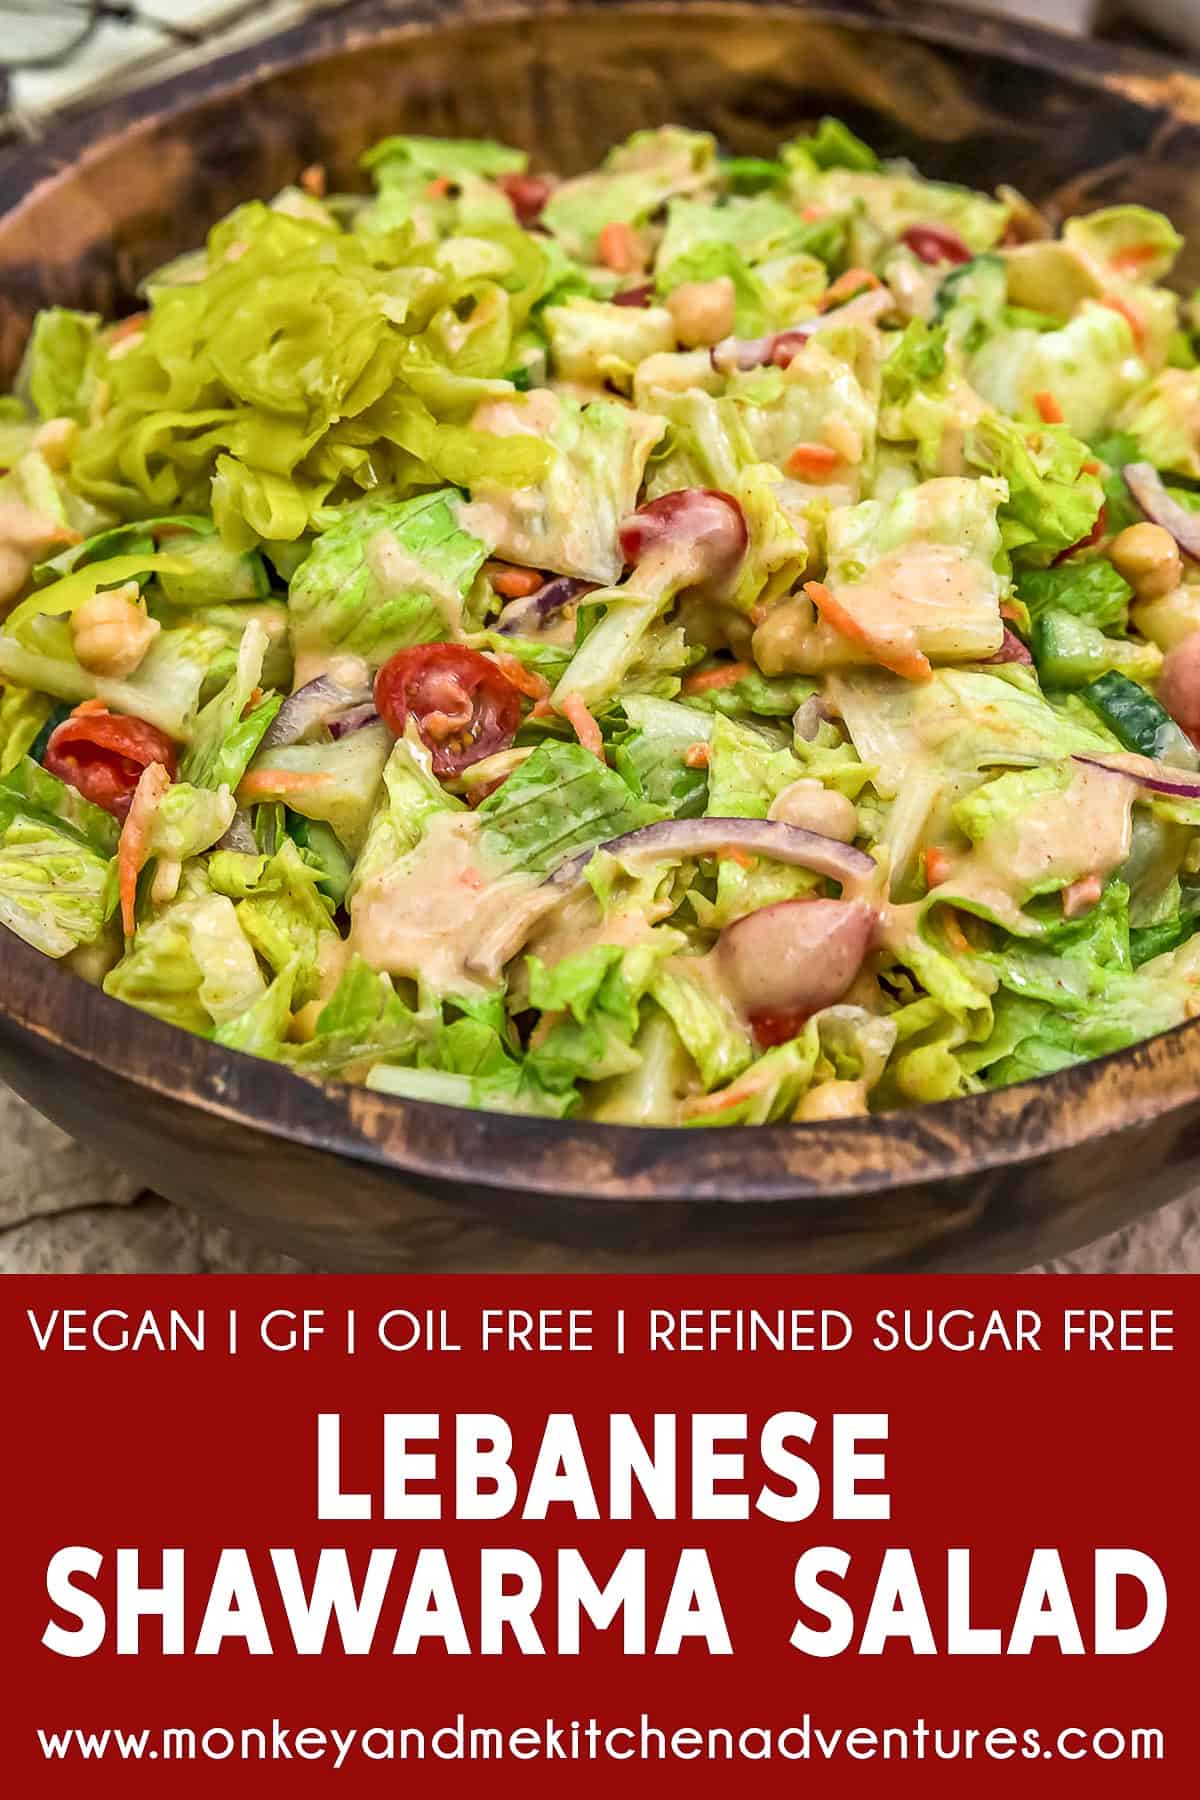 Vegan Lebanese Shawarma Salad with text description